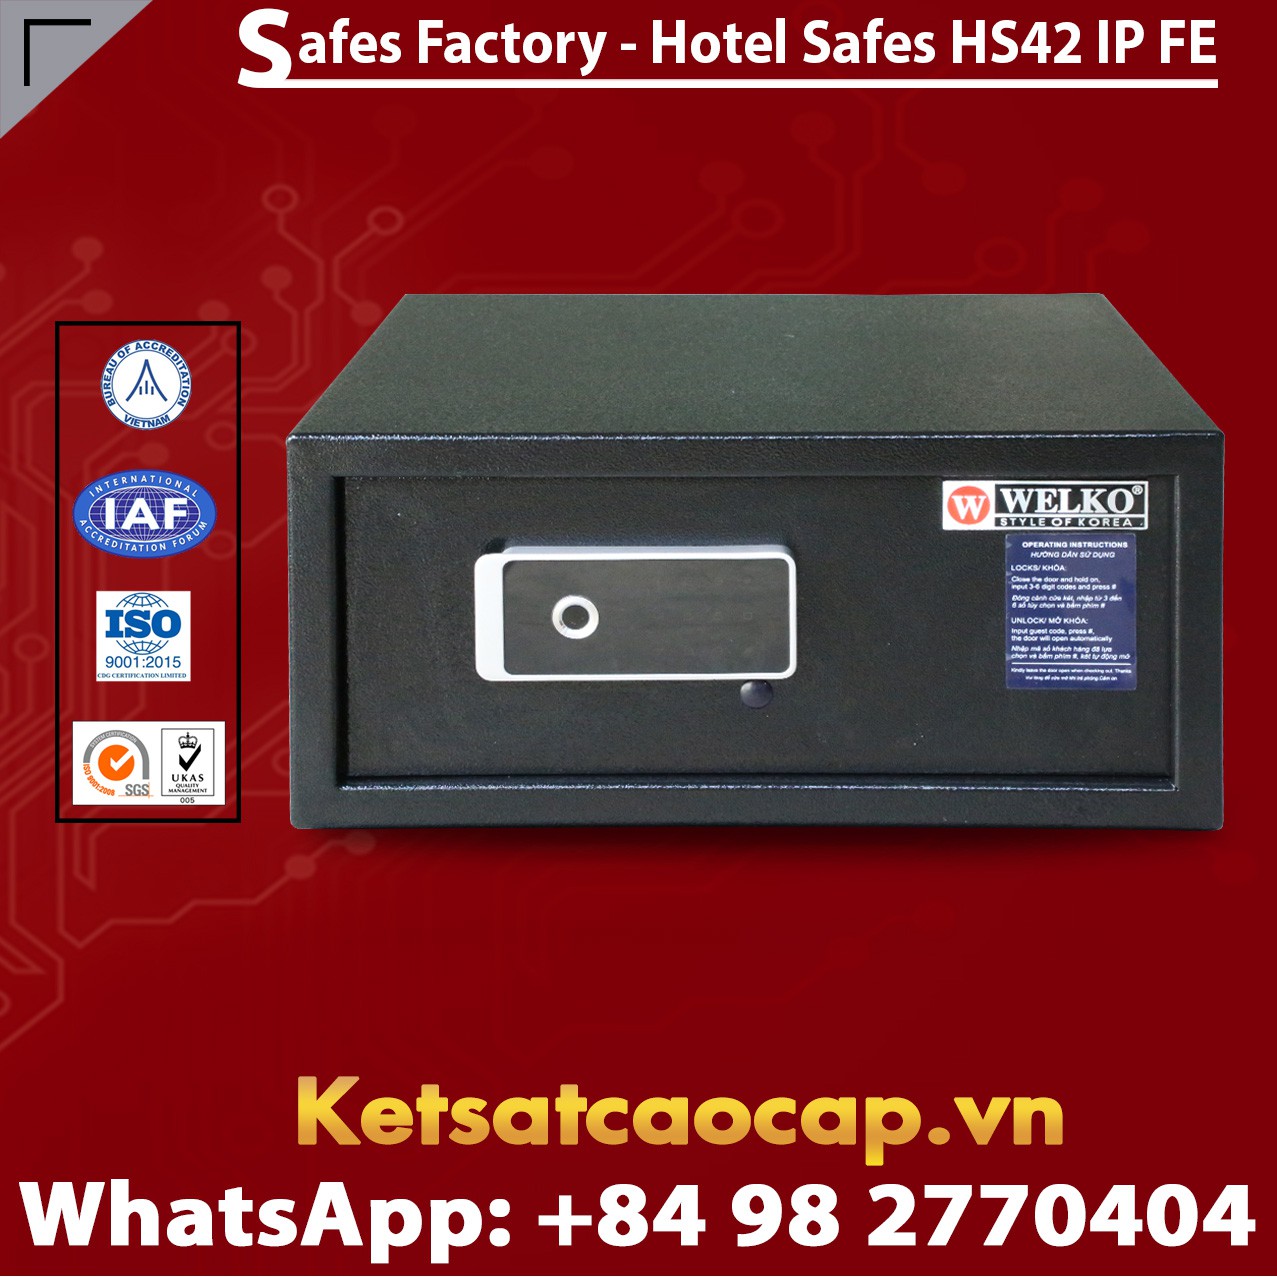 Safe in Hotel WELKO HS42 IP FE